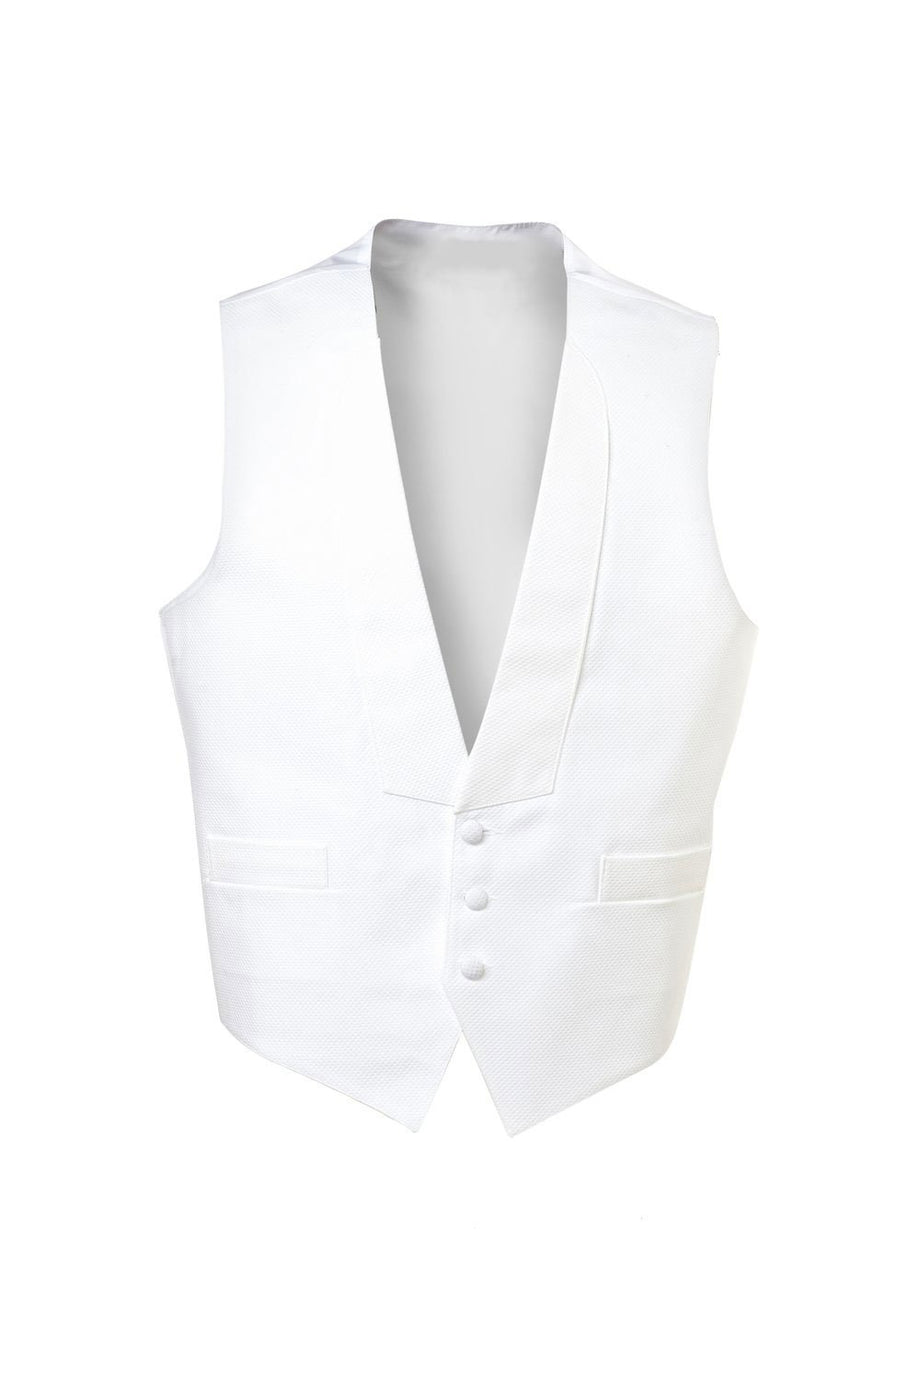 Classic Collection White Pique Full Back Tuxedo Vest